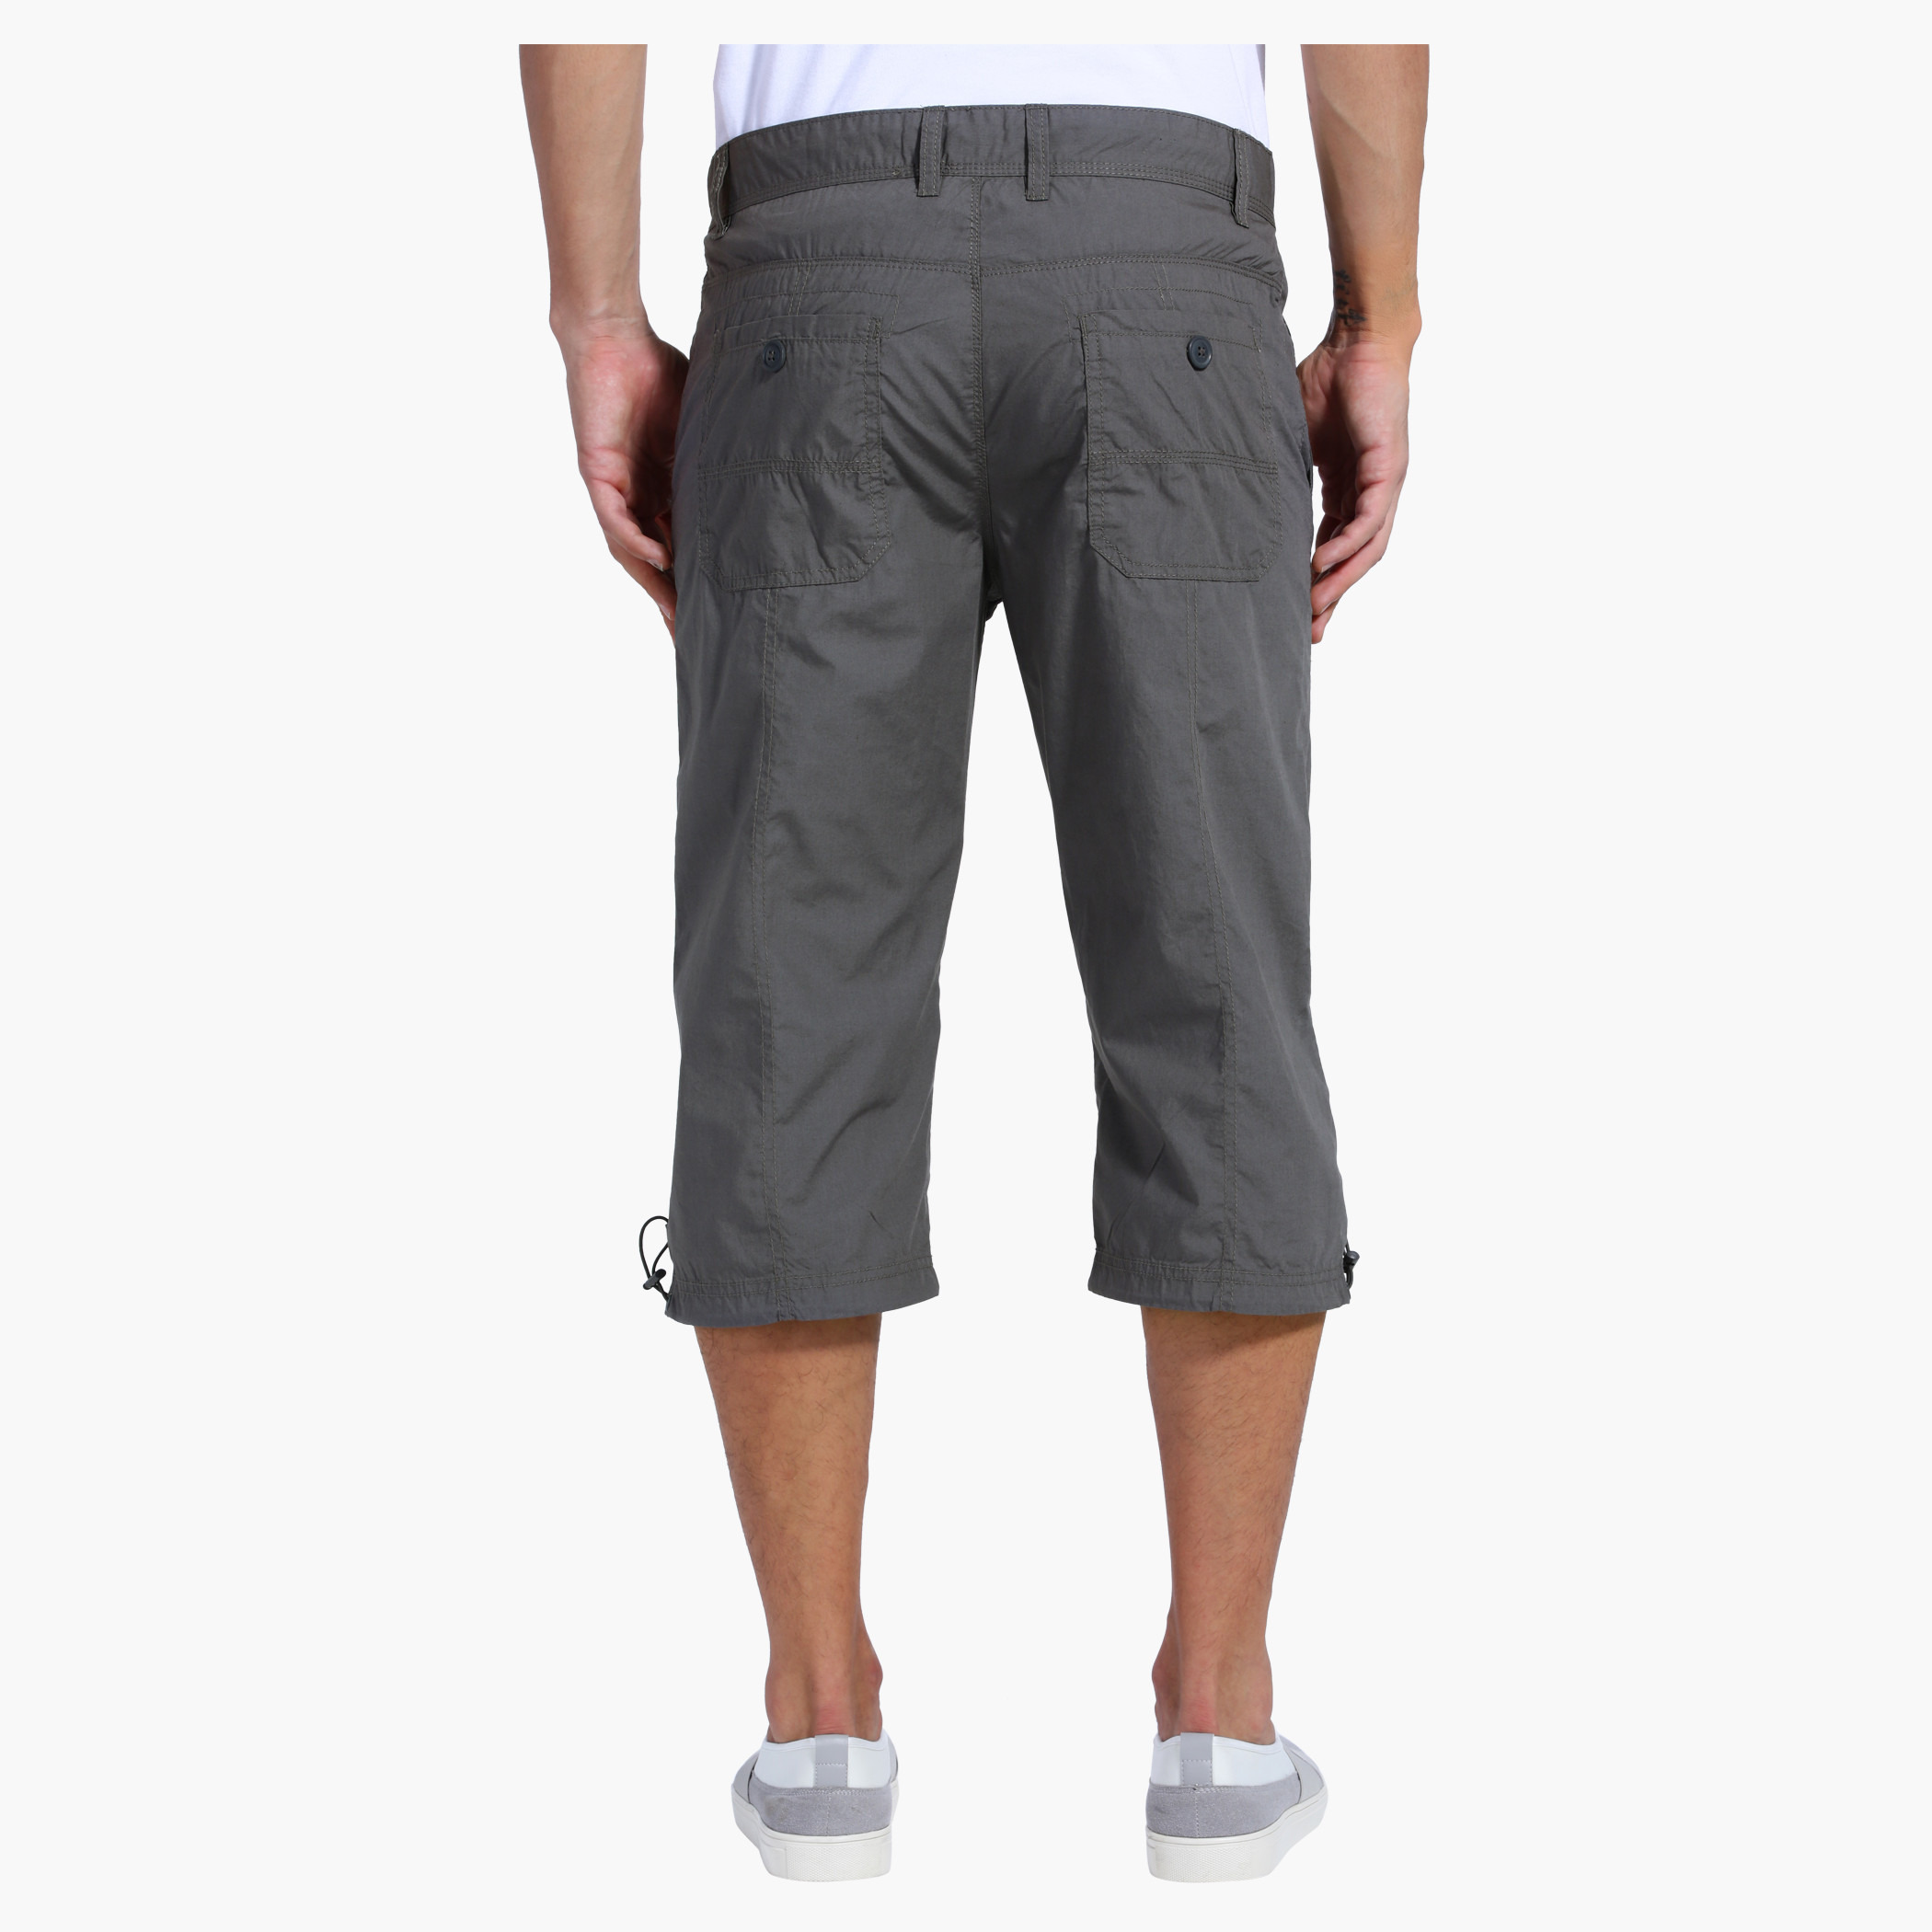 Men Cargo 3/4 pants, Men's Fashion, Bottoms, Shorts on Carousell